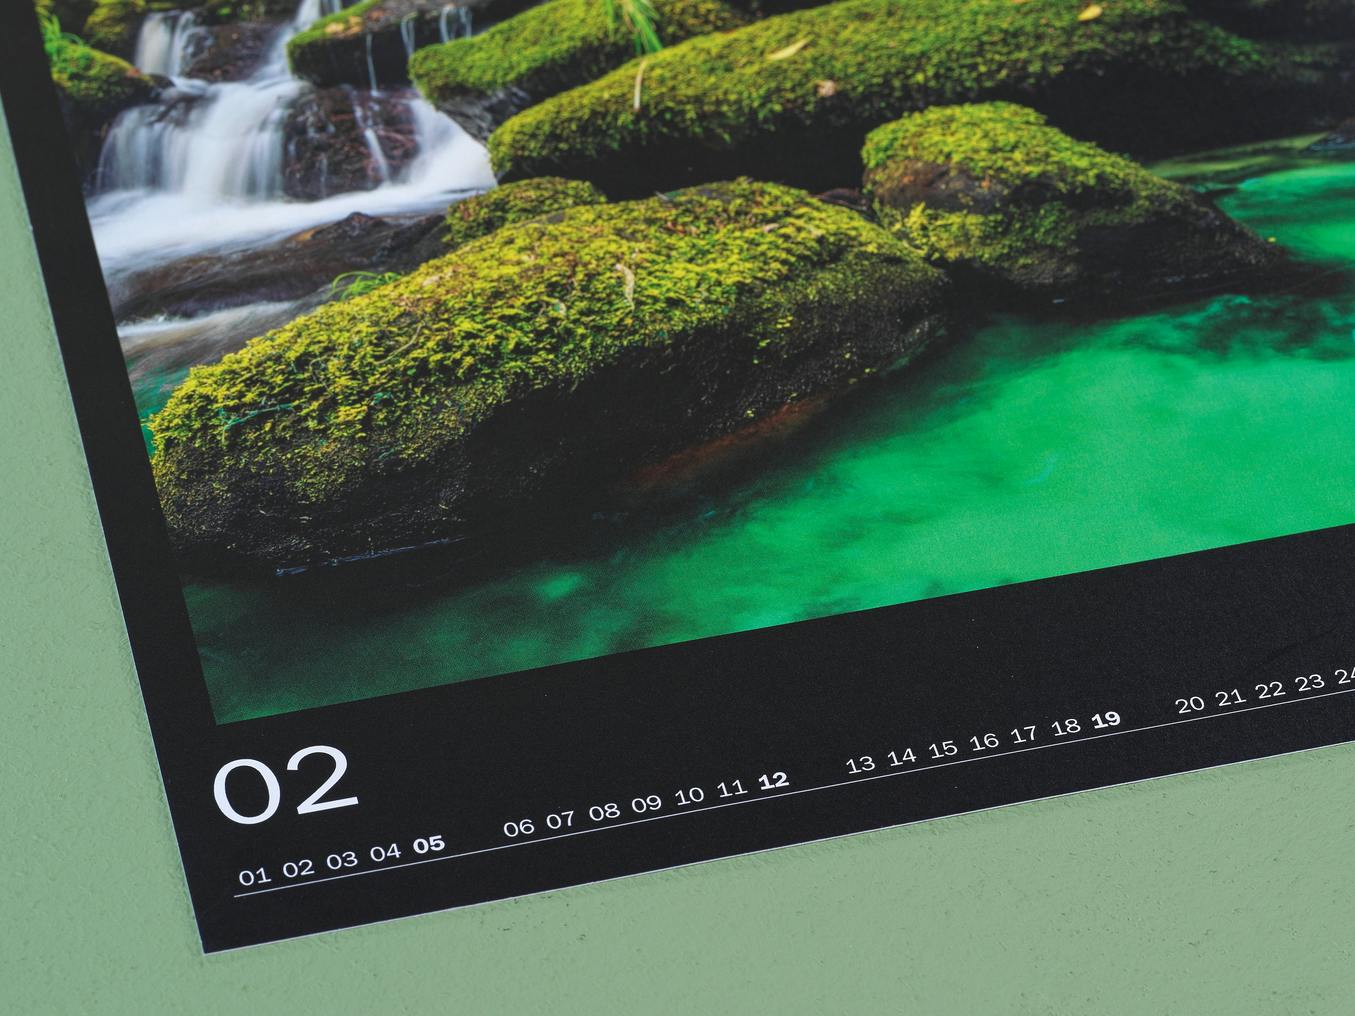 Detailed view of a photo calendar with premium paper extra matt